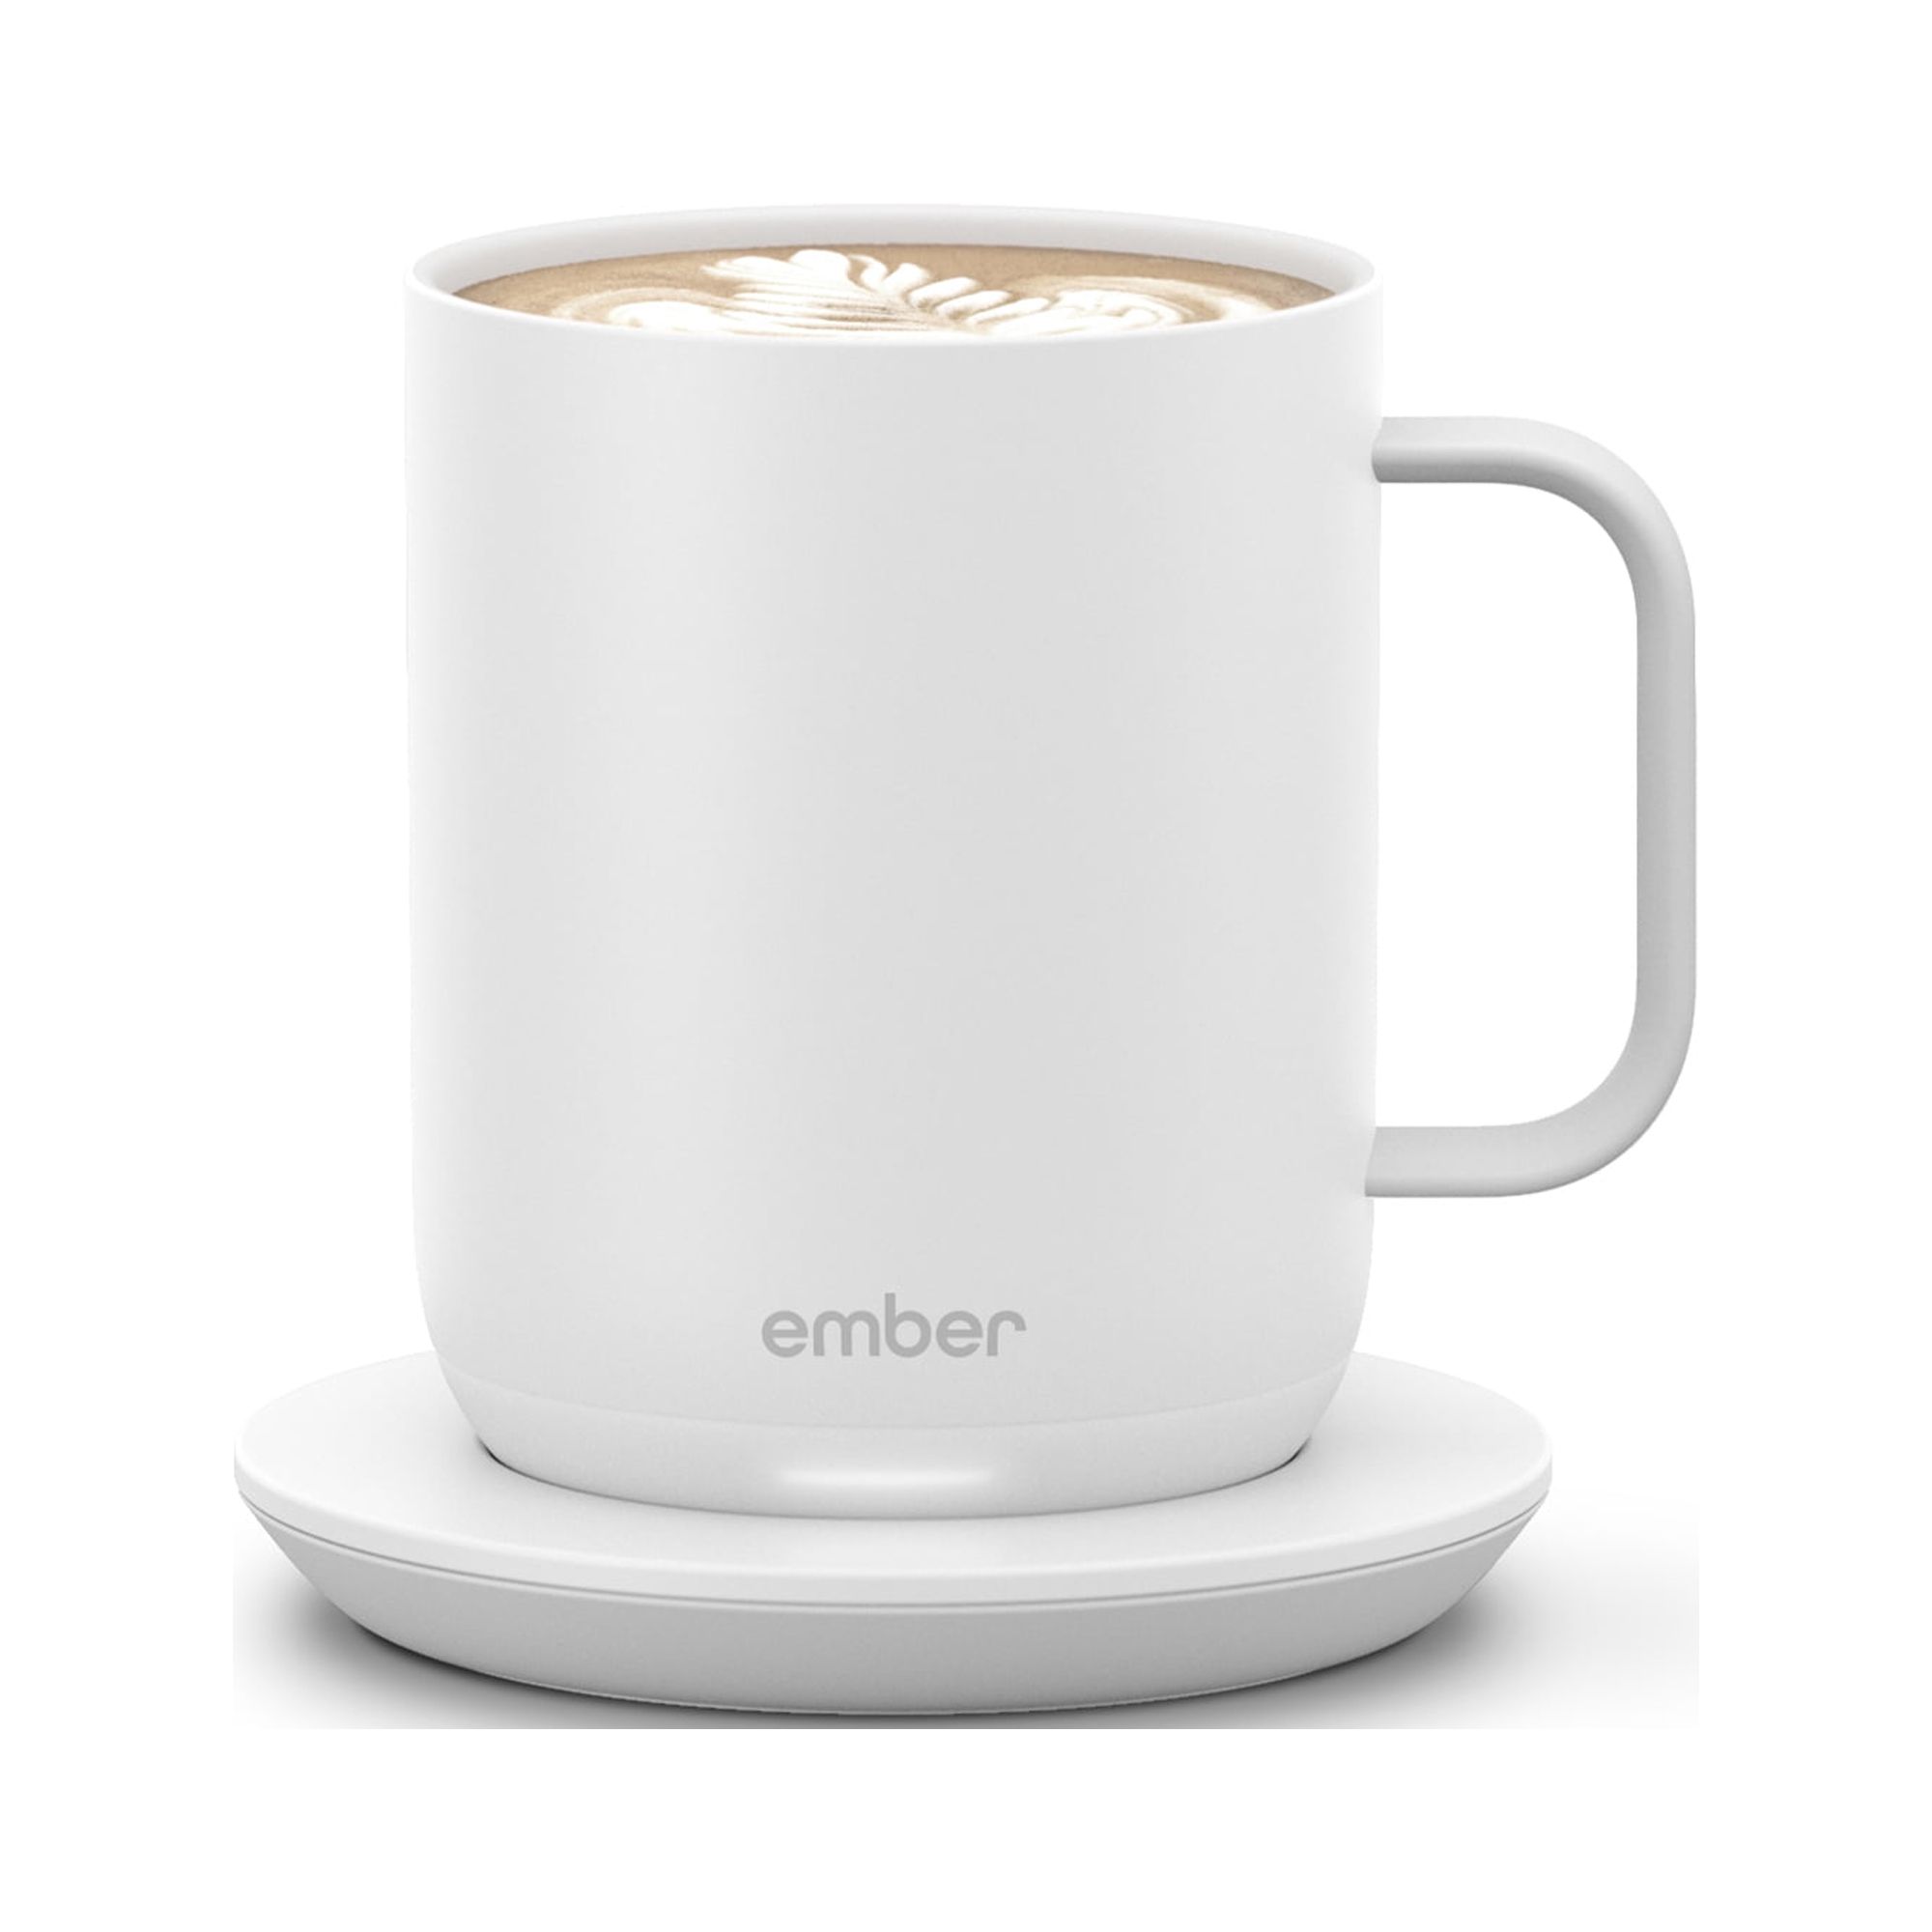 Ember Temperature Control Smart Mug 2, 10 oz, White, 1.5-hr Battery Life - App Controlled Heated Coffee Mug - Improved Design - image 2 of 9